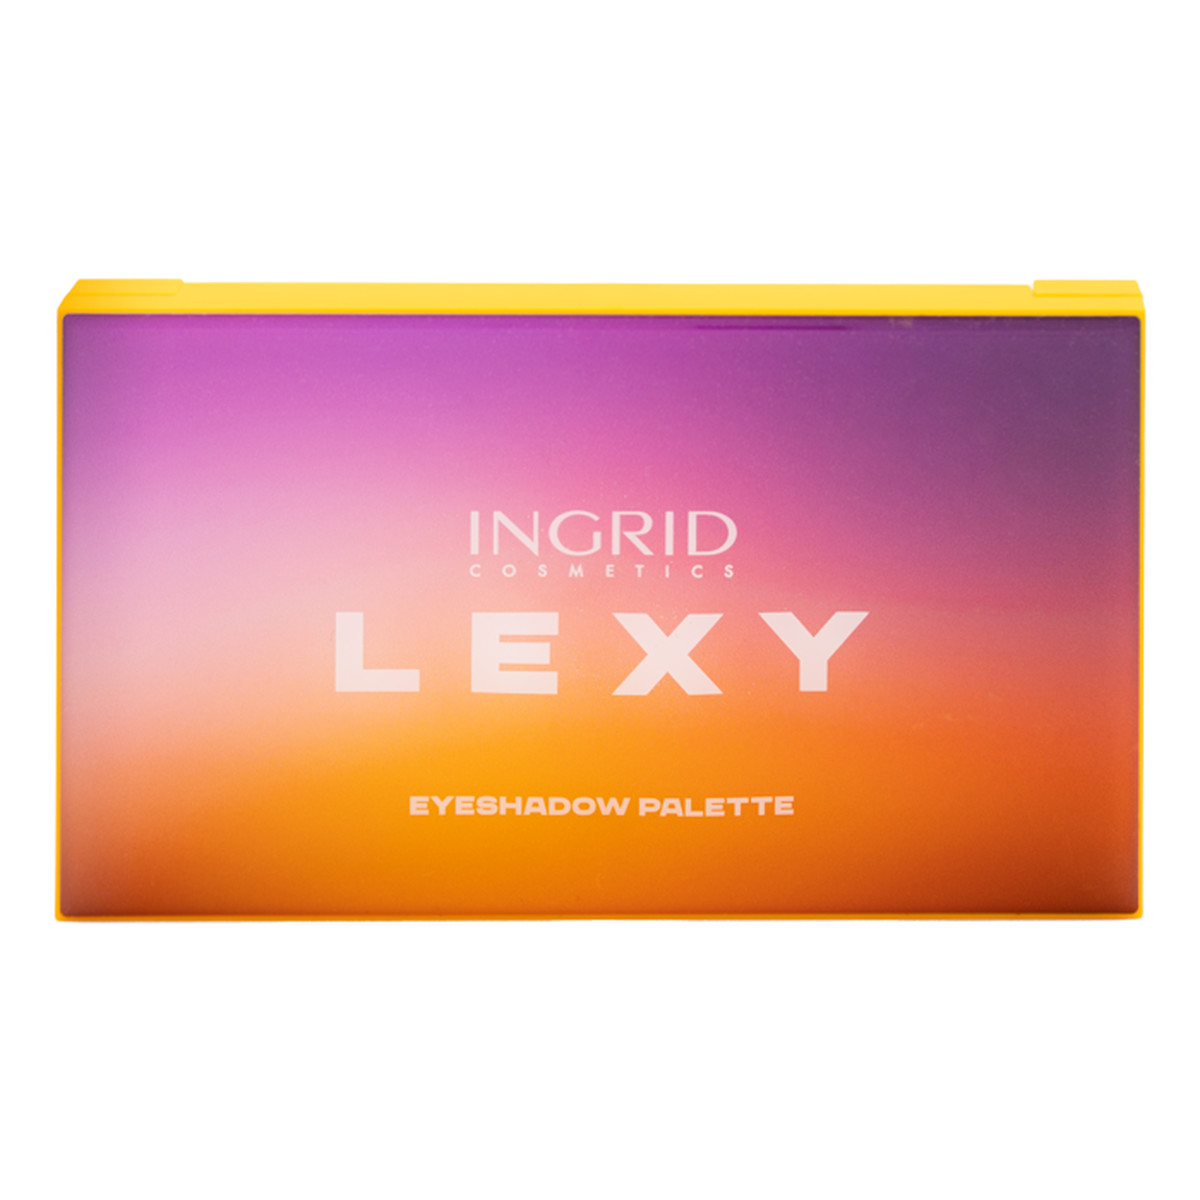 Ingrid Lexy Eyeshadow Palette paleta cieni do powiek Golden Hour 12g